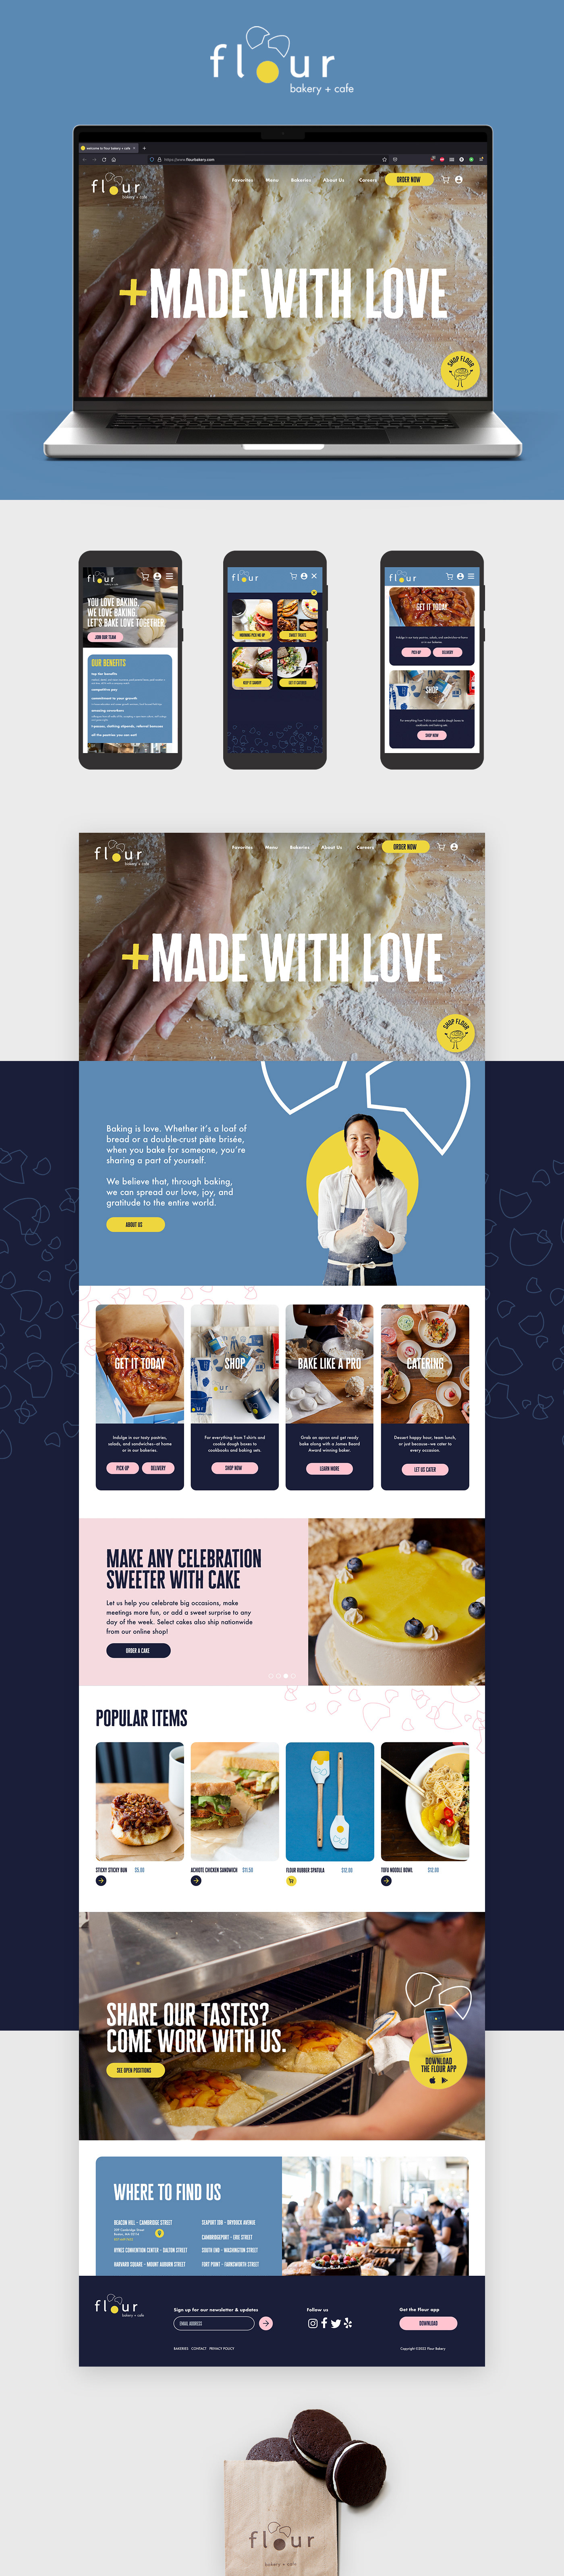 bakery bakery branding ecommerce website flour UI/UX Web Design  Website